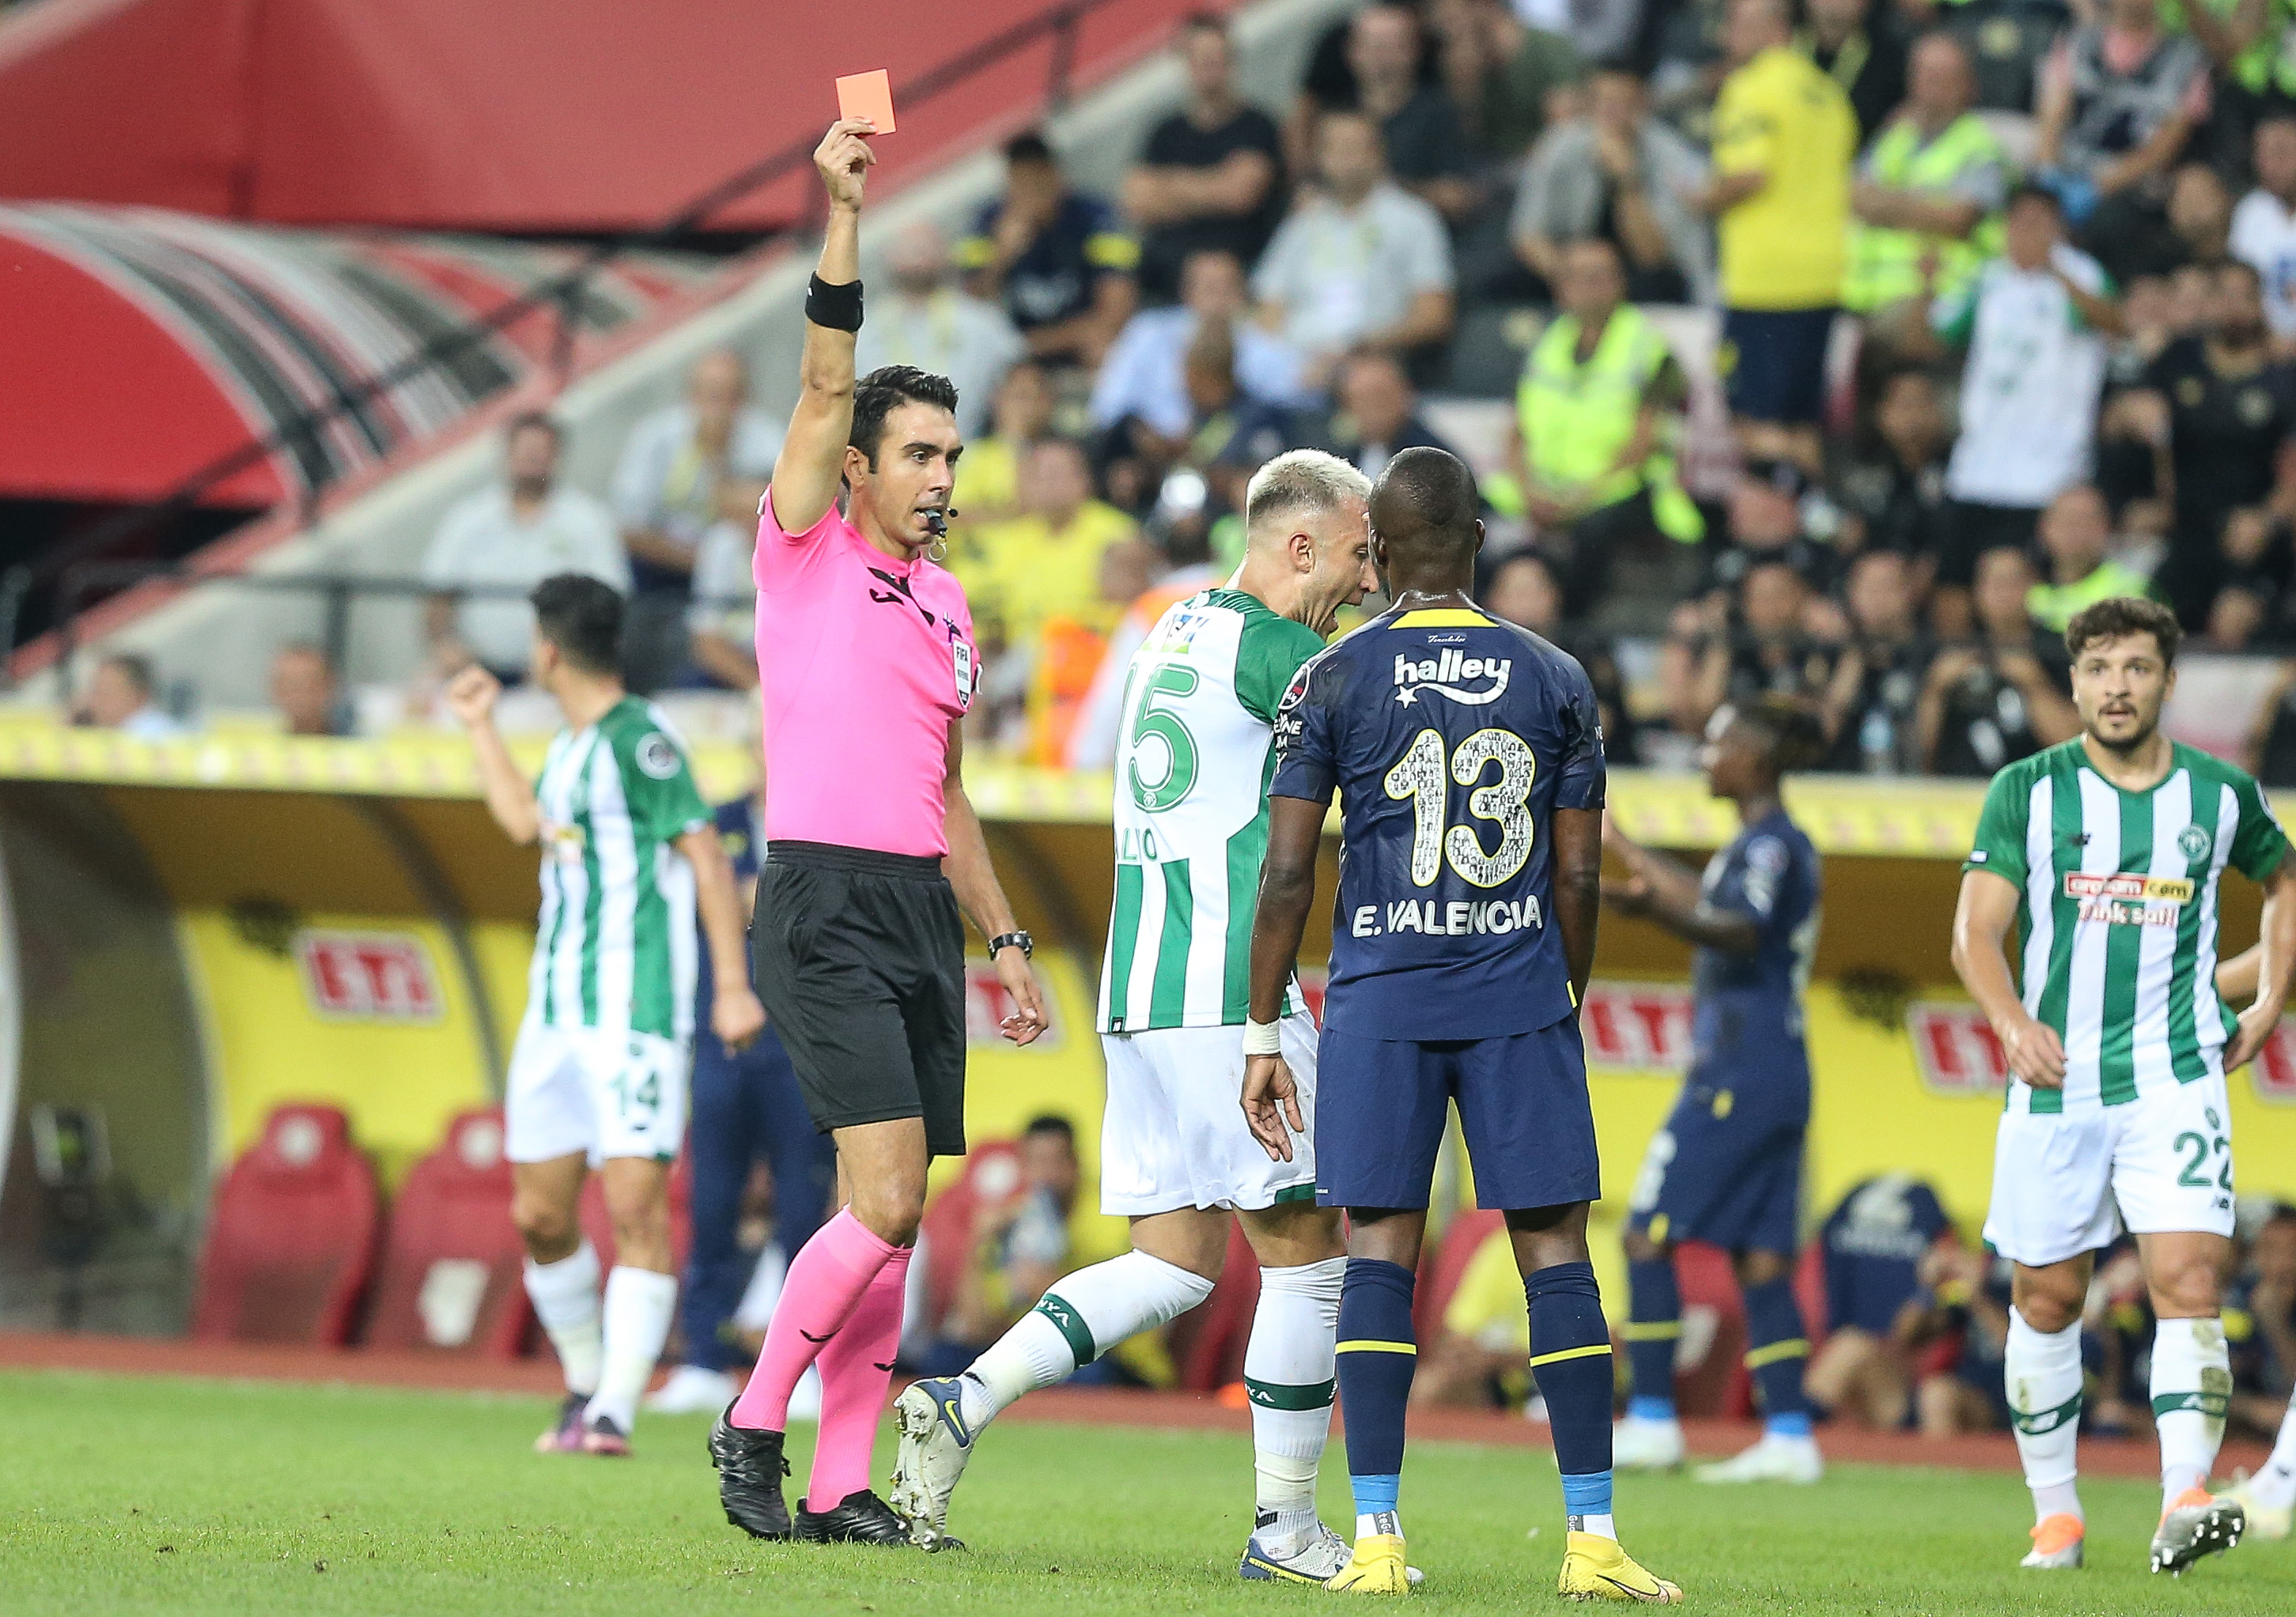 Antalyaspor vs Fenerbahçe: A Clash of Football Titans